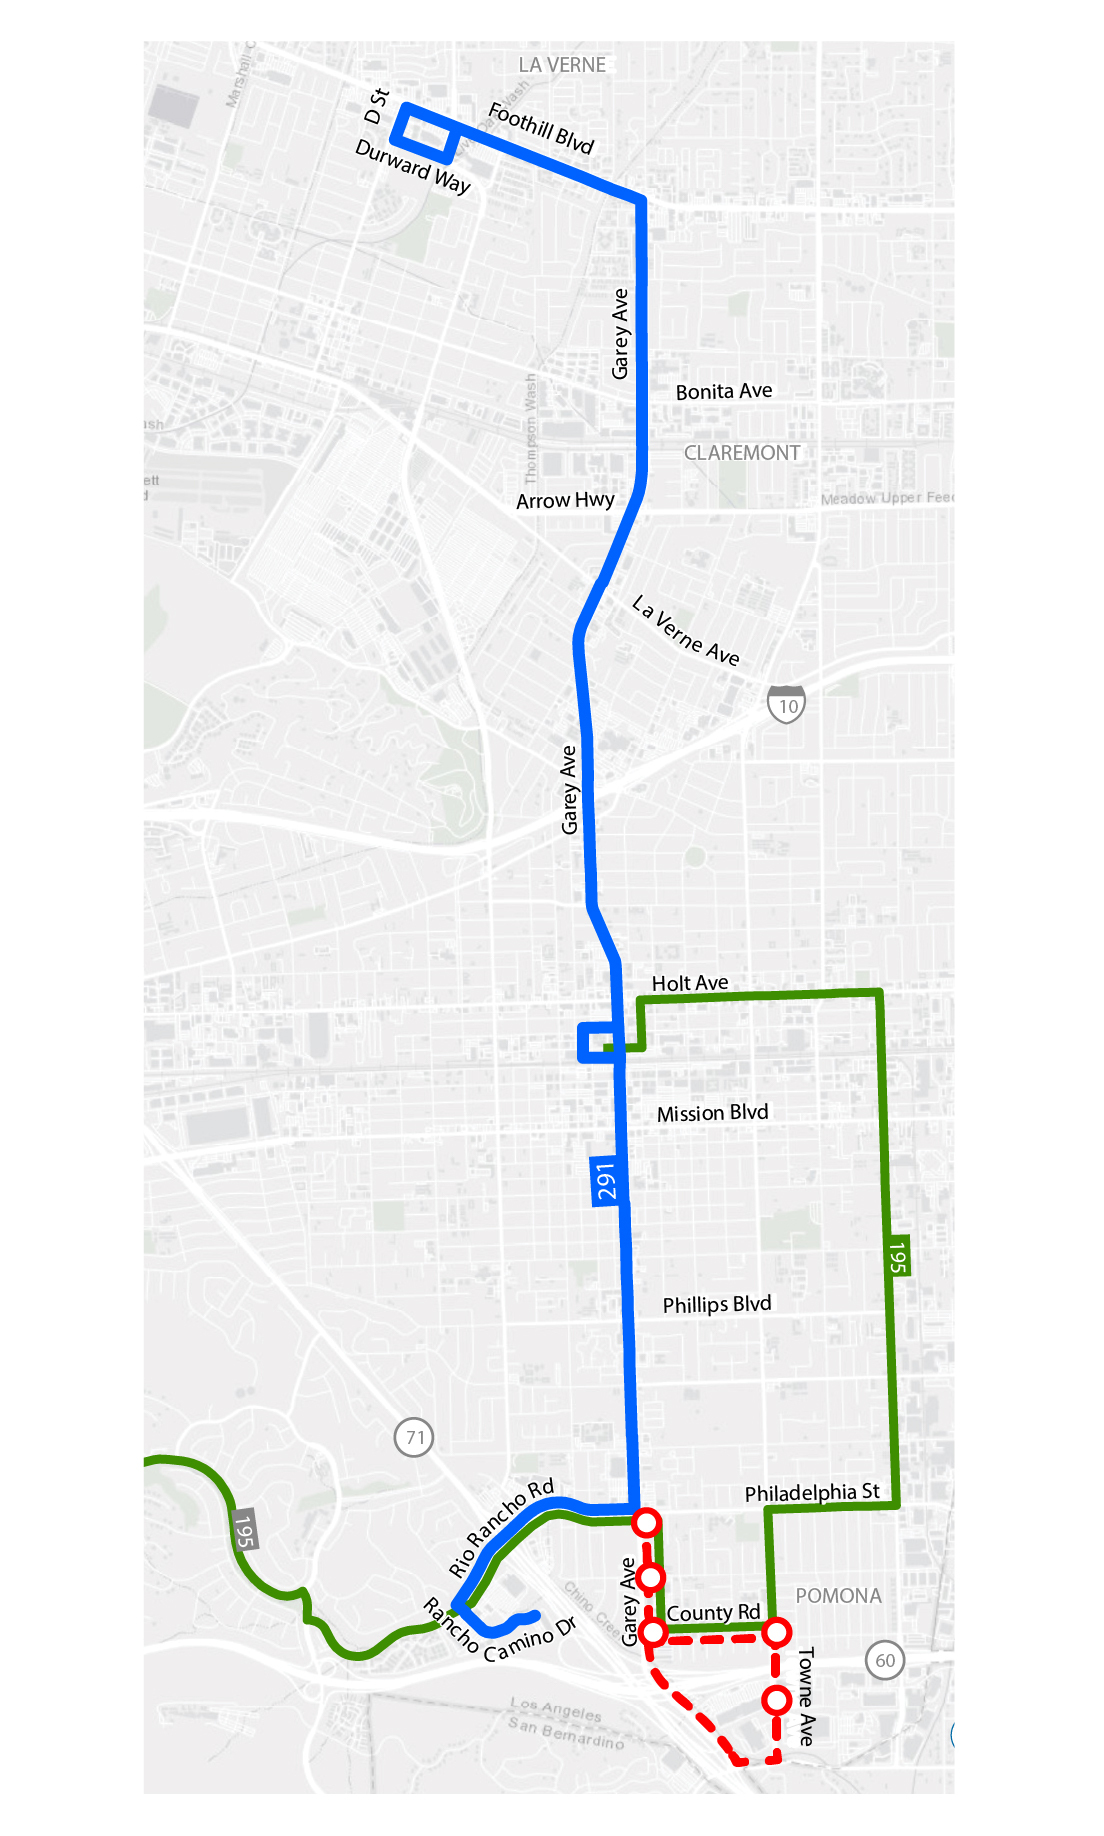 南端将服务于 Rancho Camino Dr，而不是 County Rd 和 Towne Ave。195 线仍将服务于 Garey Ave 和 County Rd。